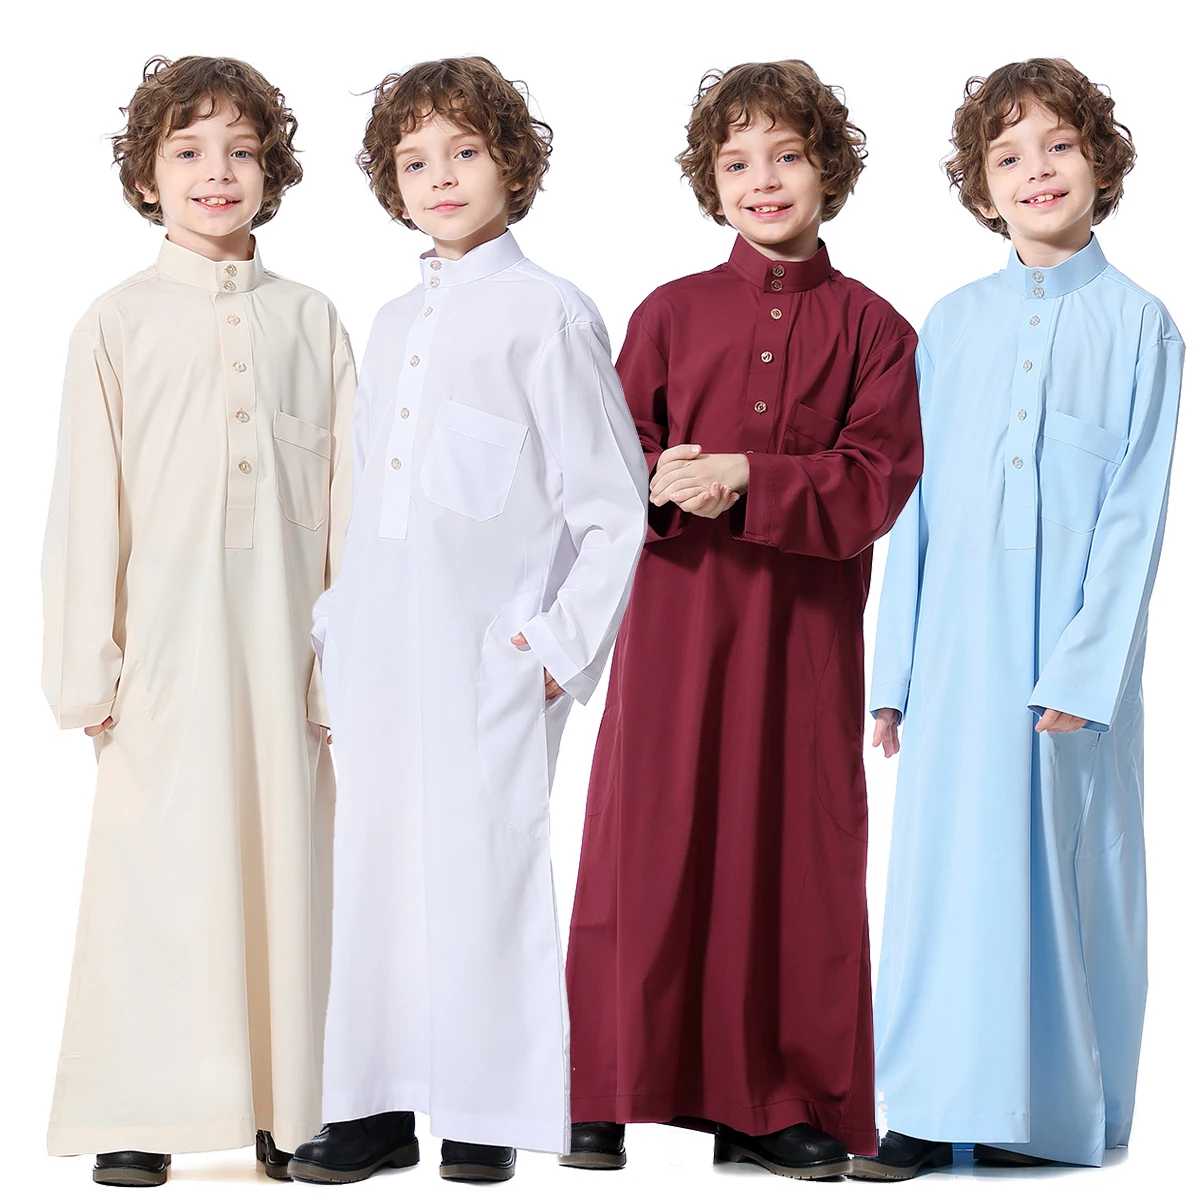 kewing Boys Muslim Thobe Long Sleeves Round Collar Zipper Robe Arab Islamic Dubai Dress 